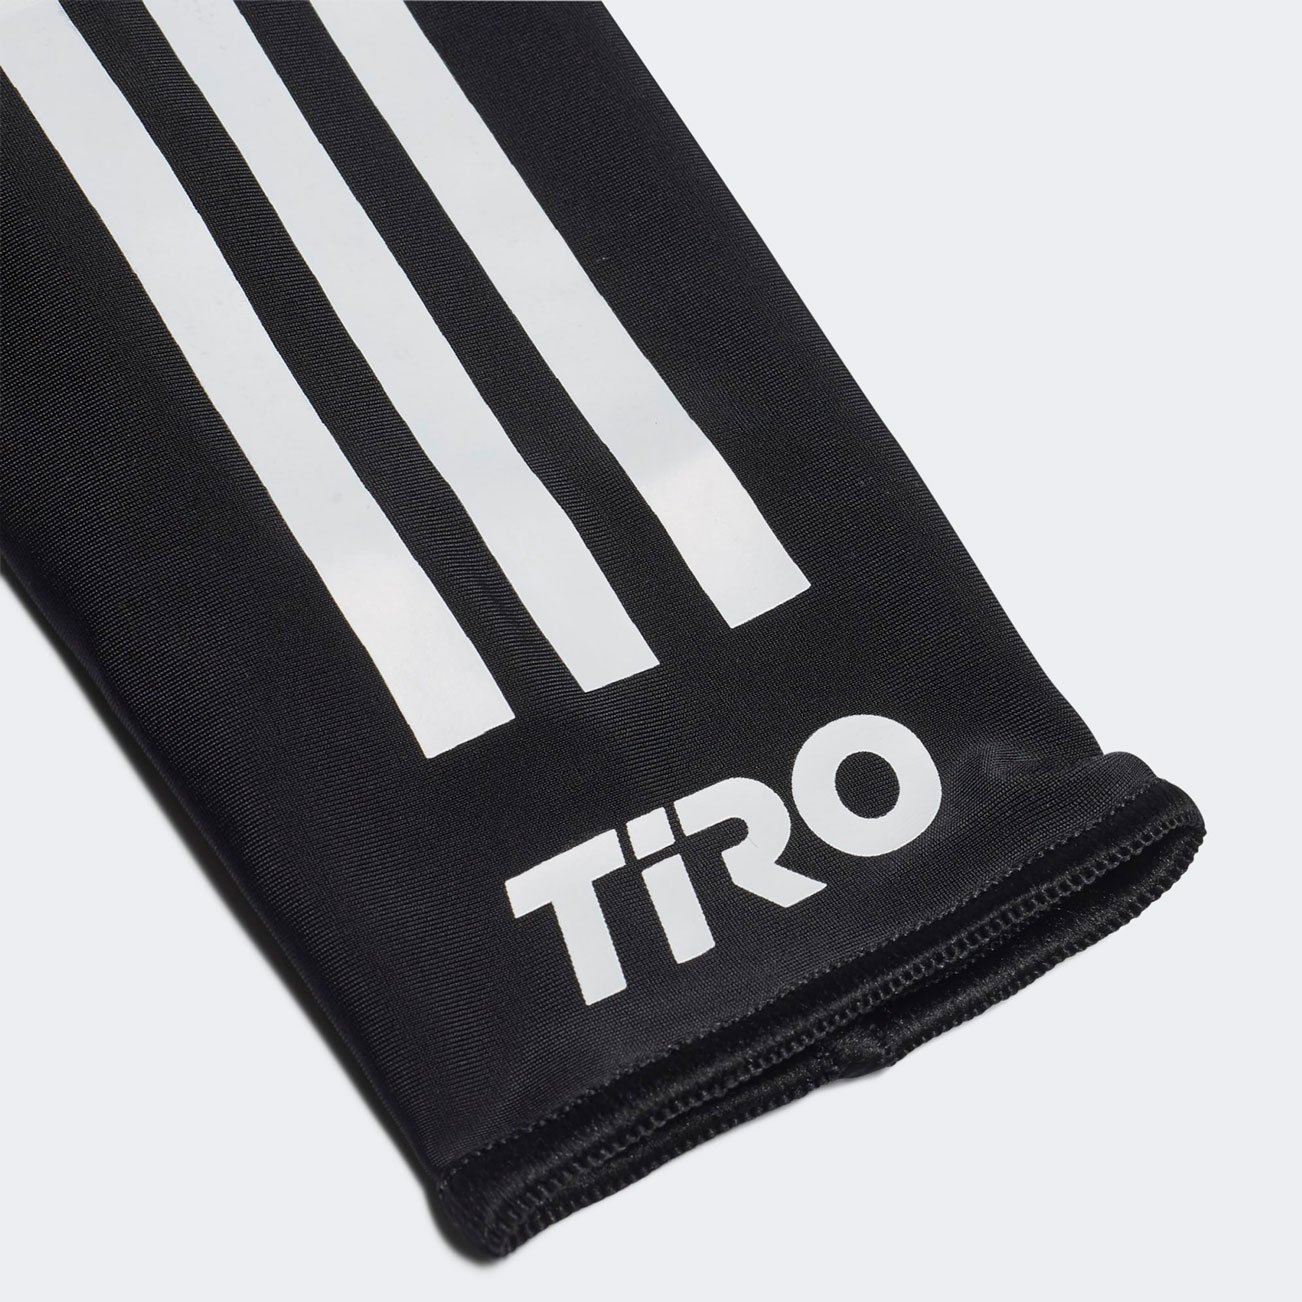 Щитки adidas Tiro League